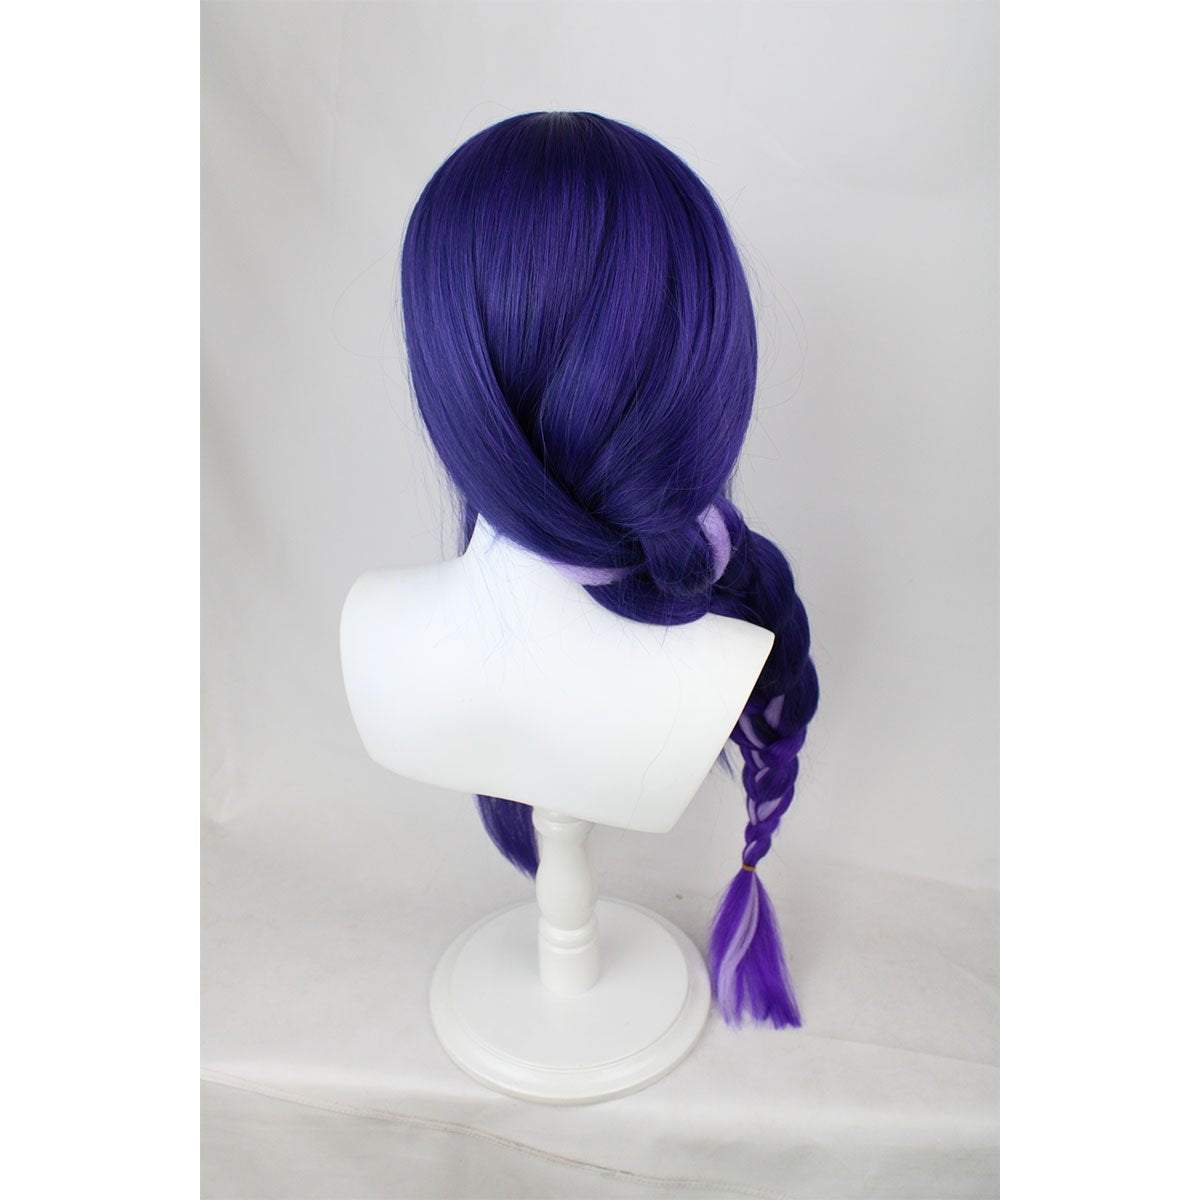 24 Inches | Purple |Costume |Straight Hair with hair bangs| CS3457B - TapLike